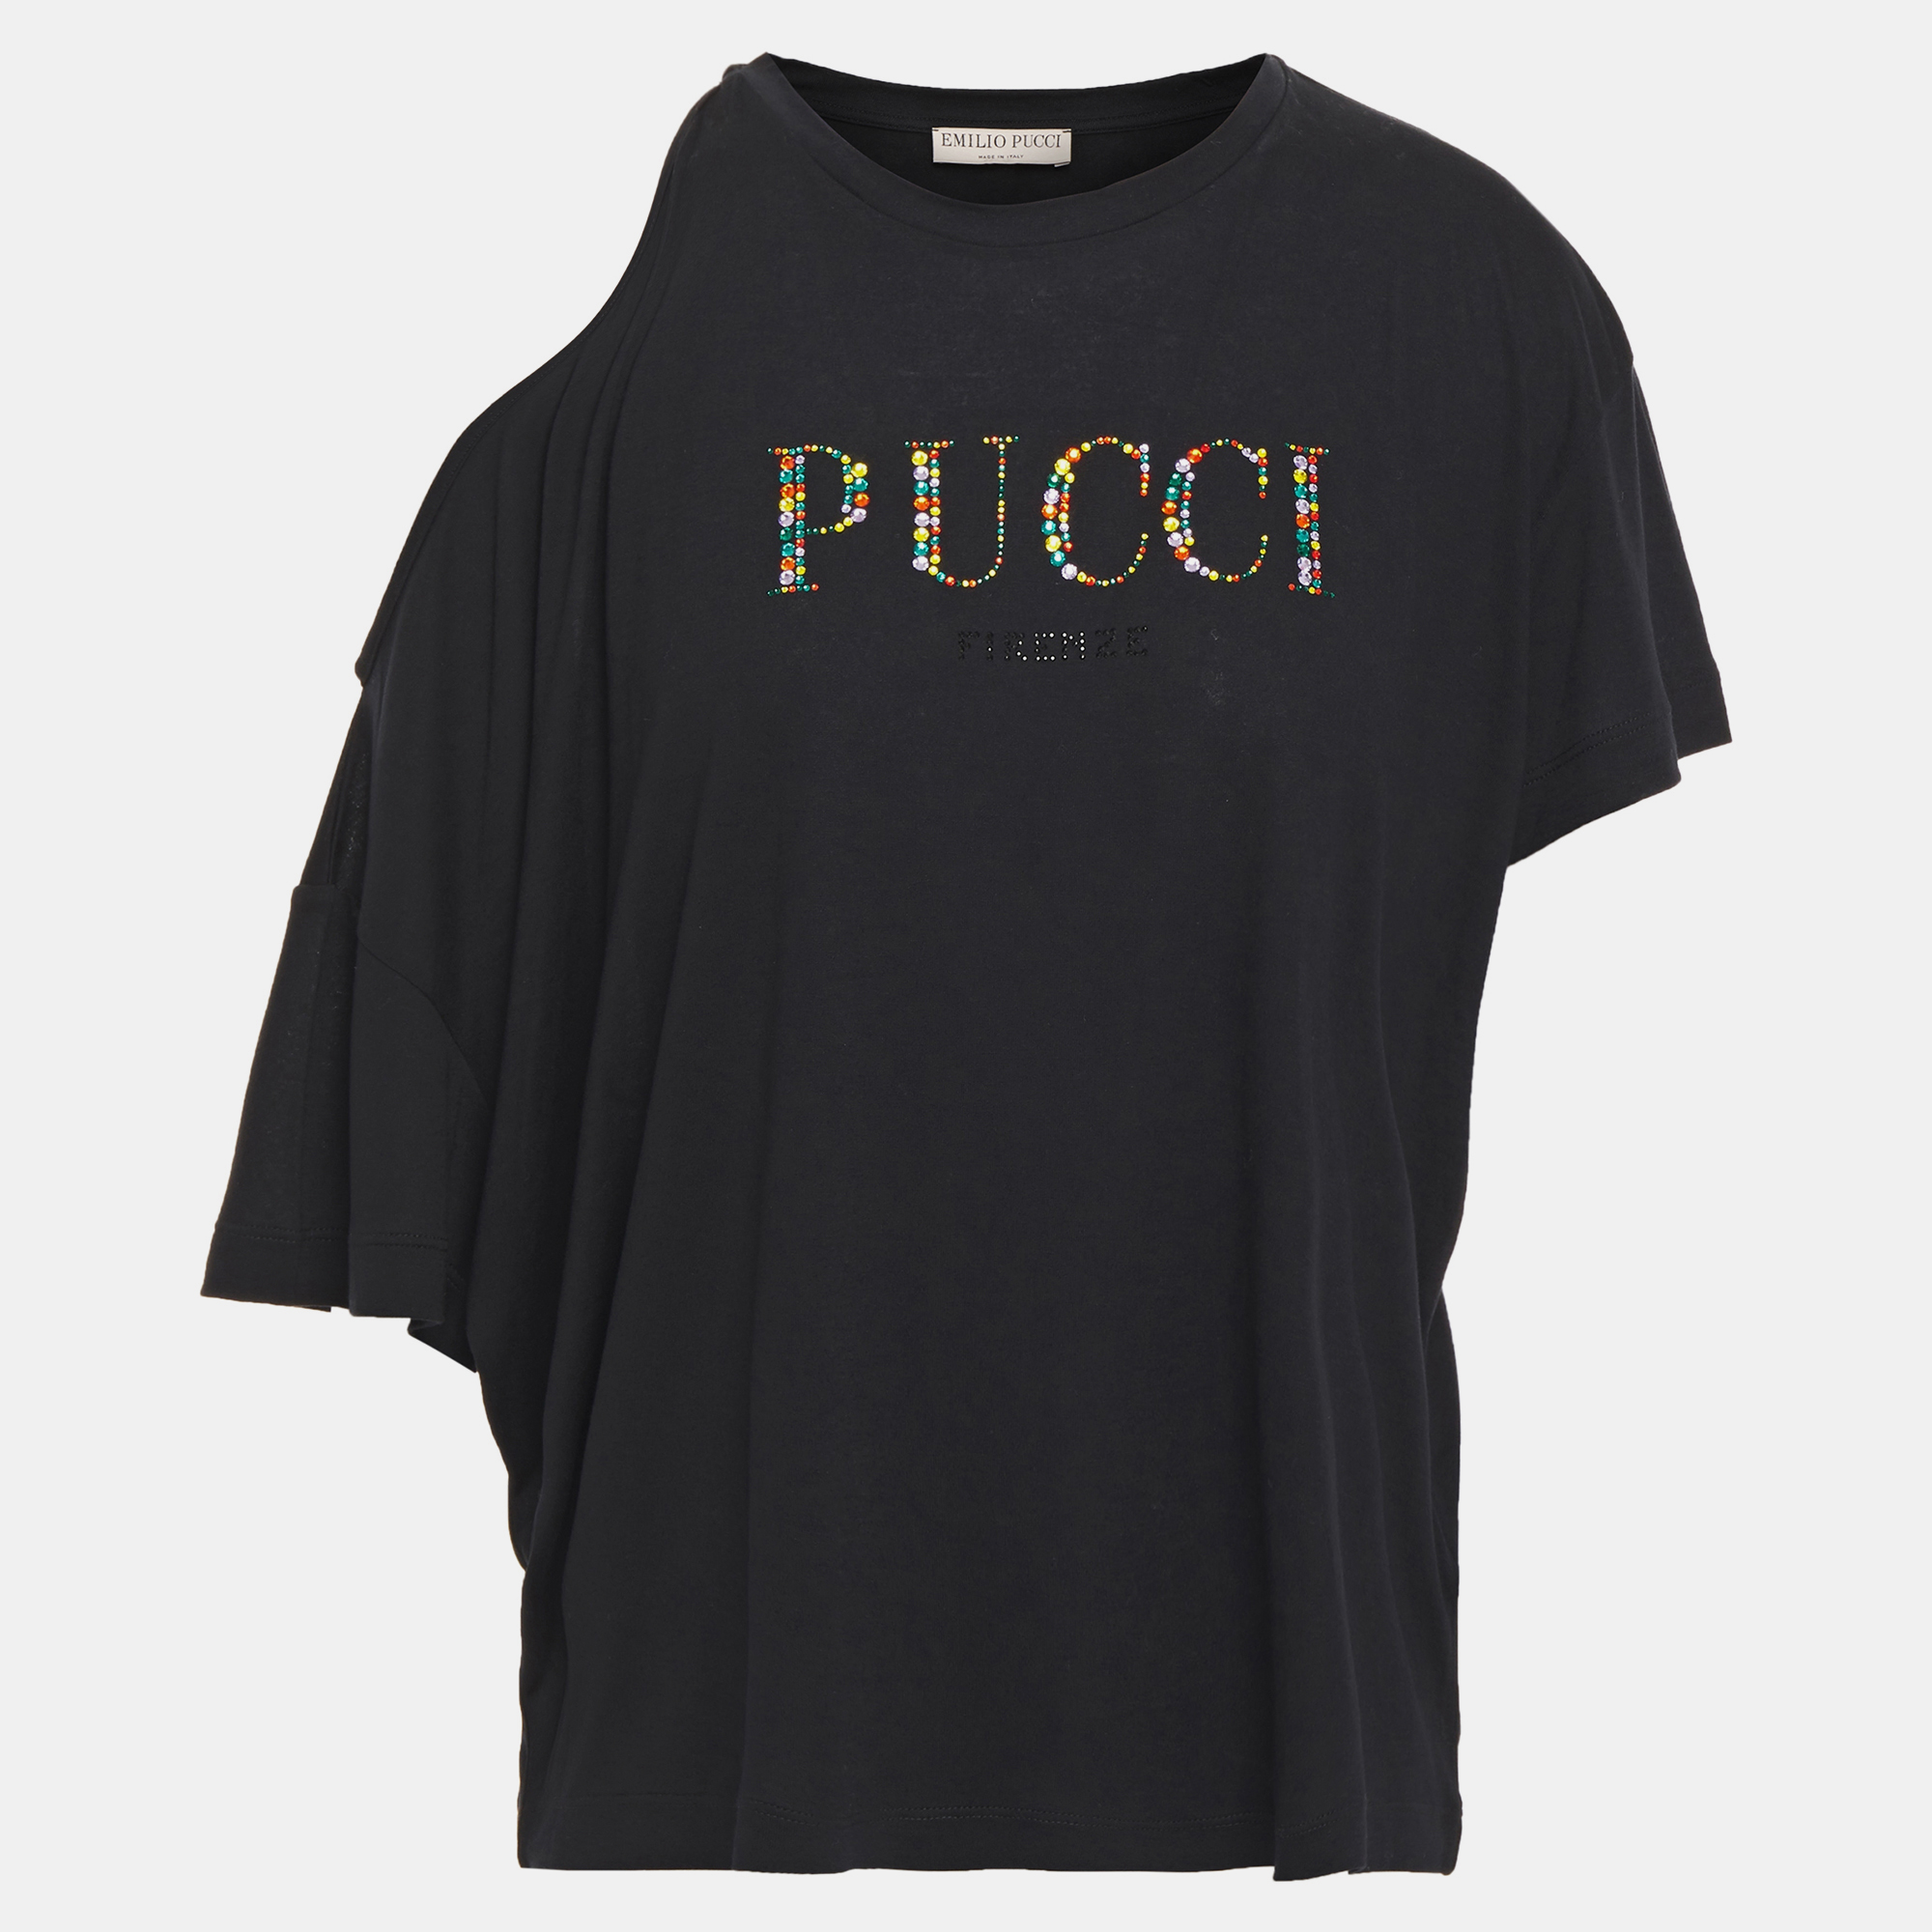 Emilio pucci viscose short sleeved top m